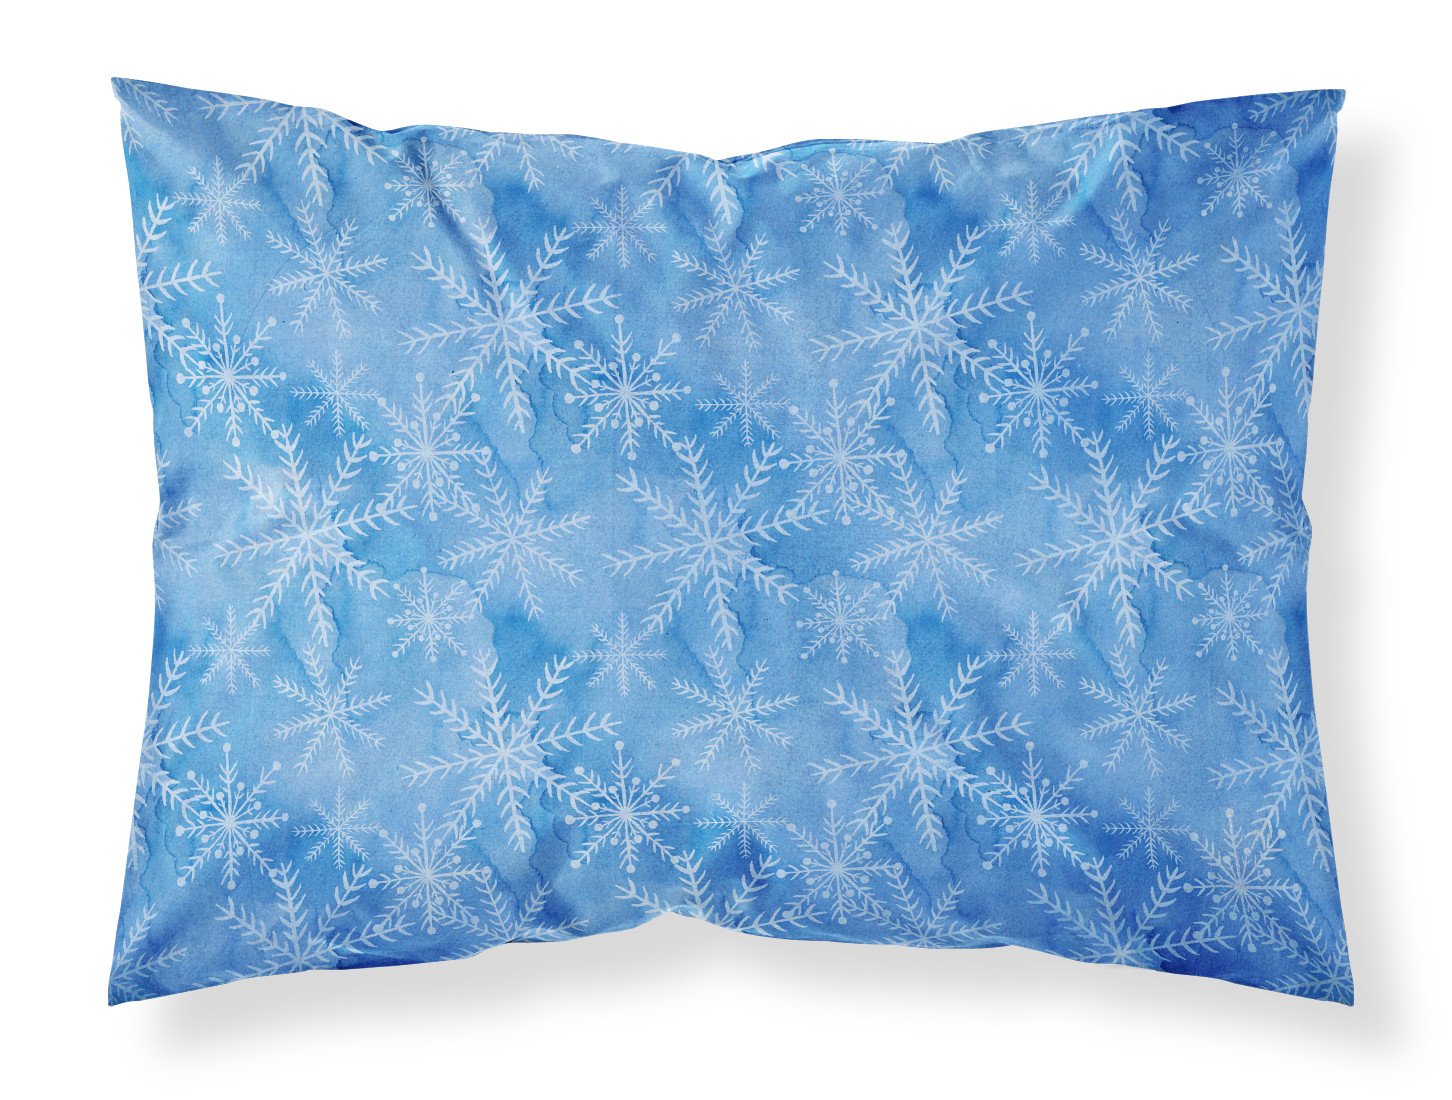 Watercolor Dark Blue Winter Snowflakes Fabric Standard Pillowcase BB7576PILLOWCASE by Caroline's Treasures